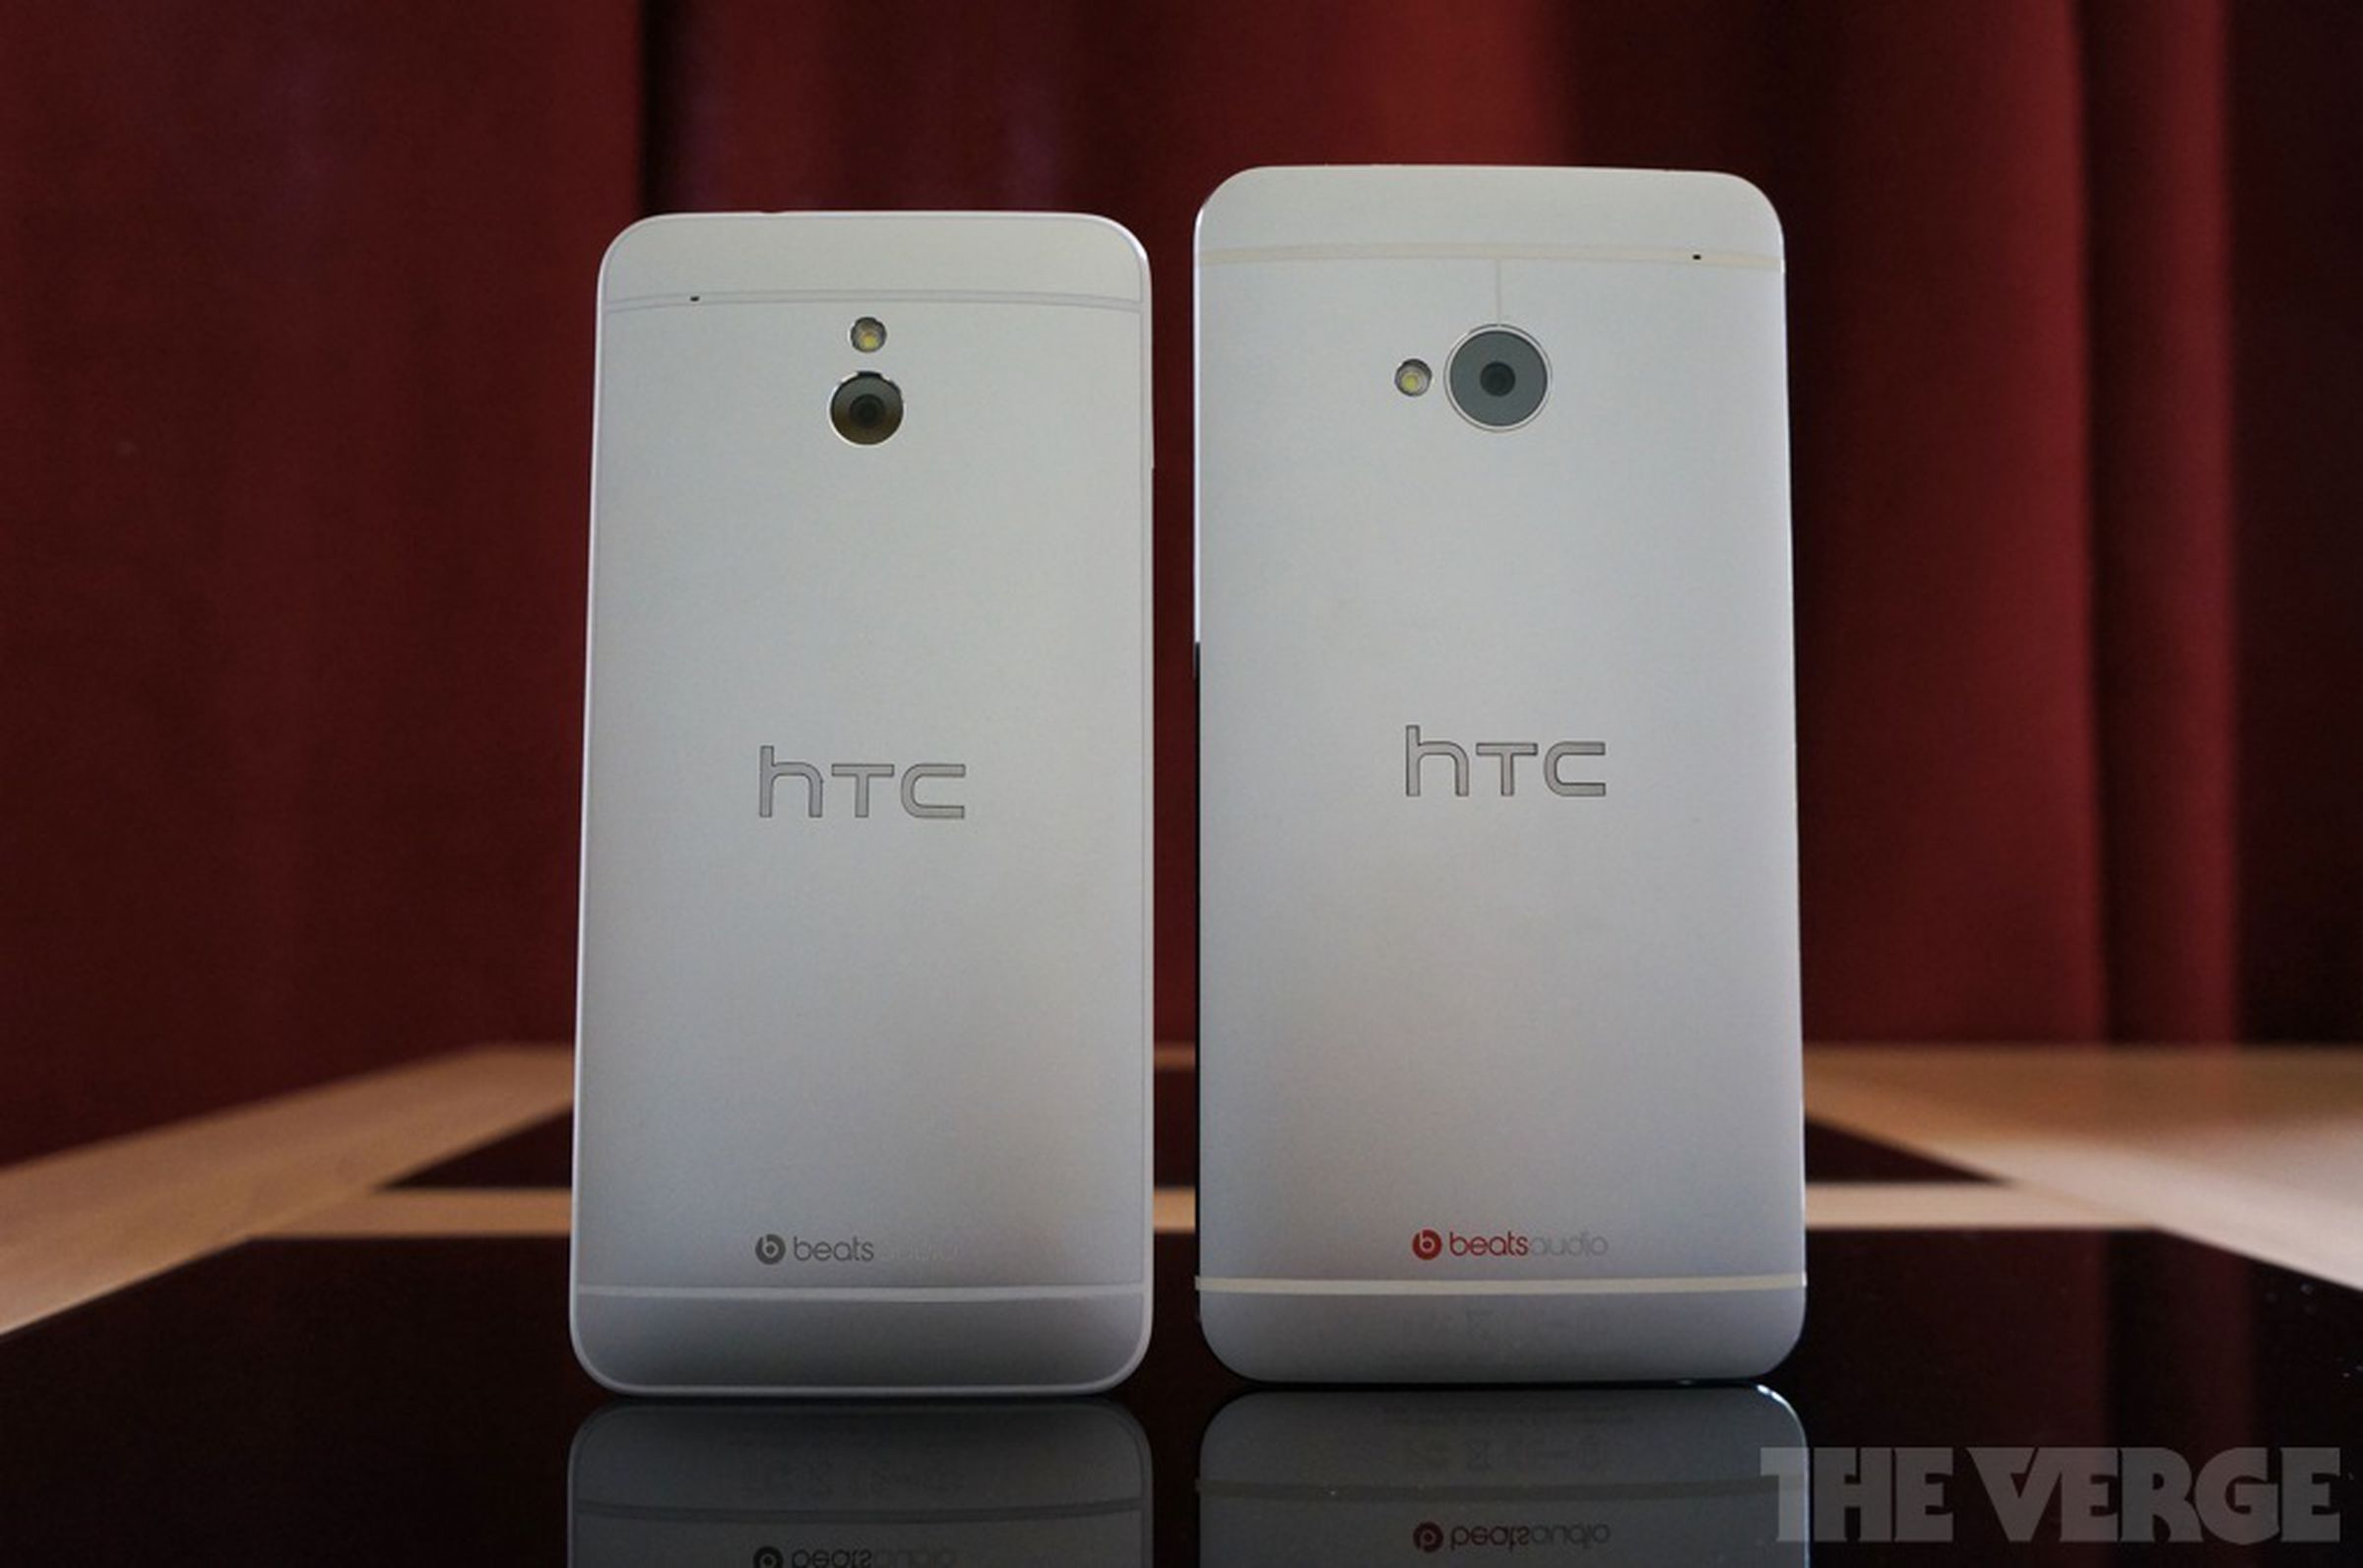 HTC One mini vs. HTC One photo gallery